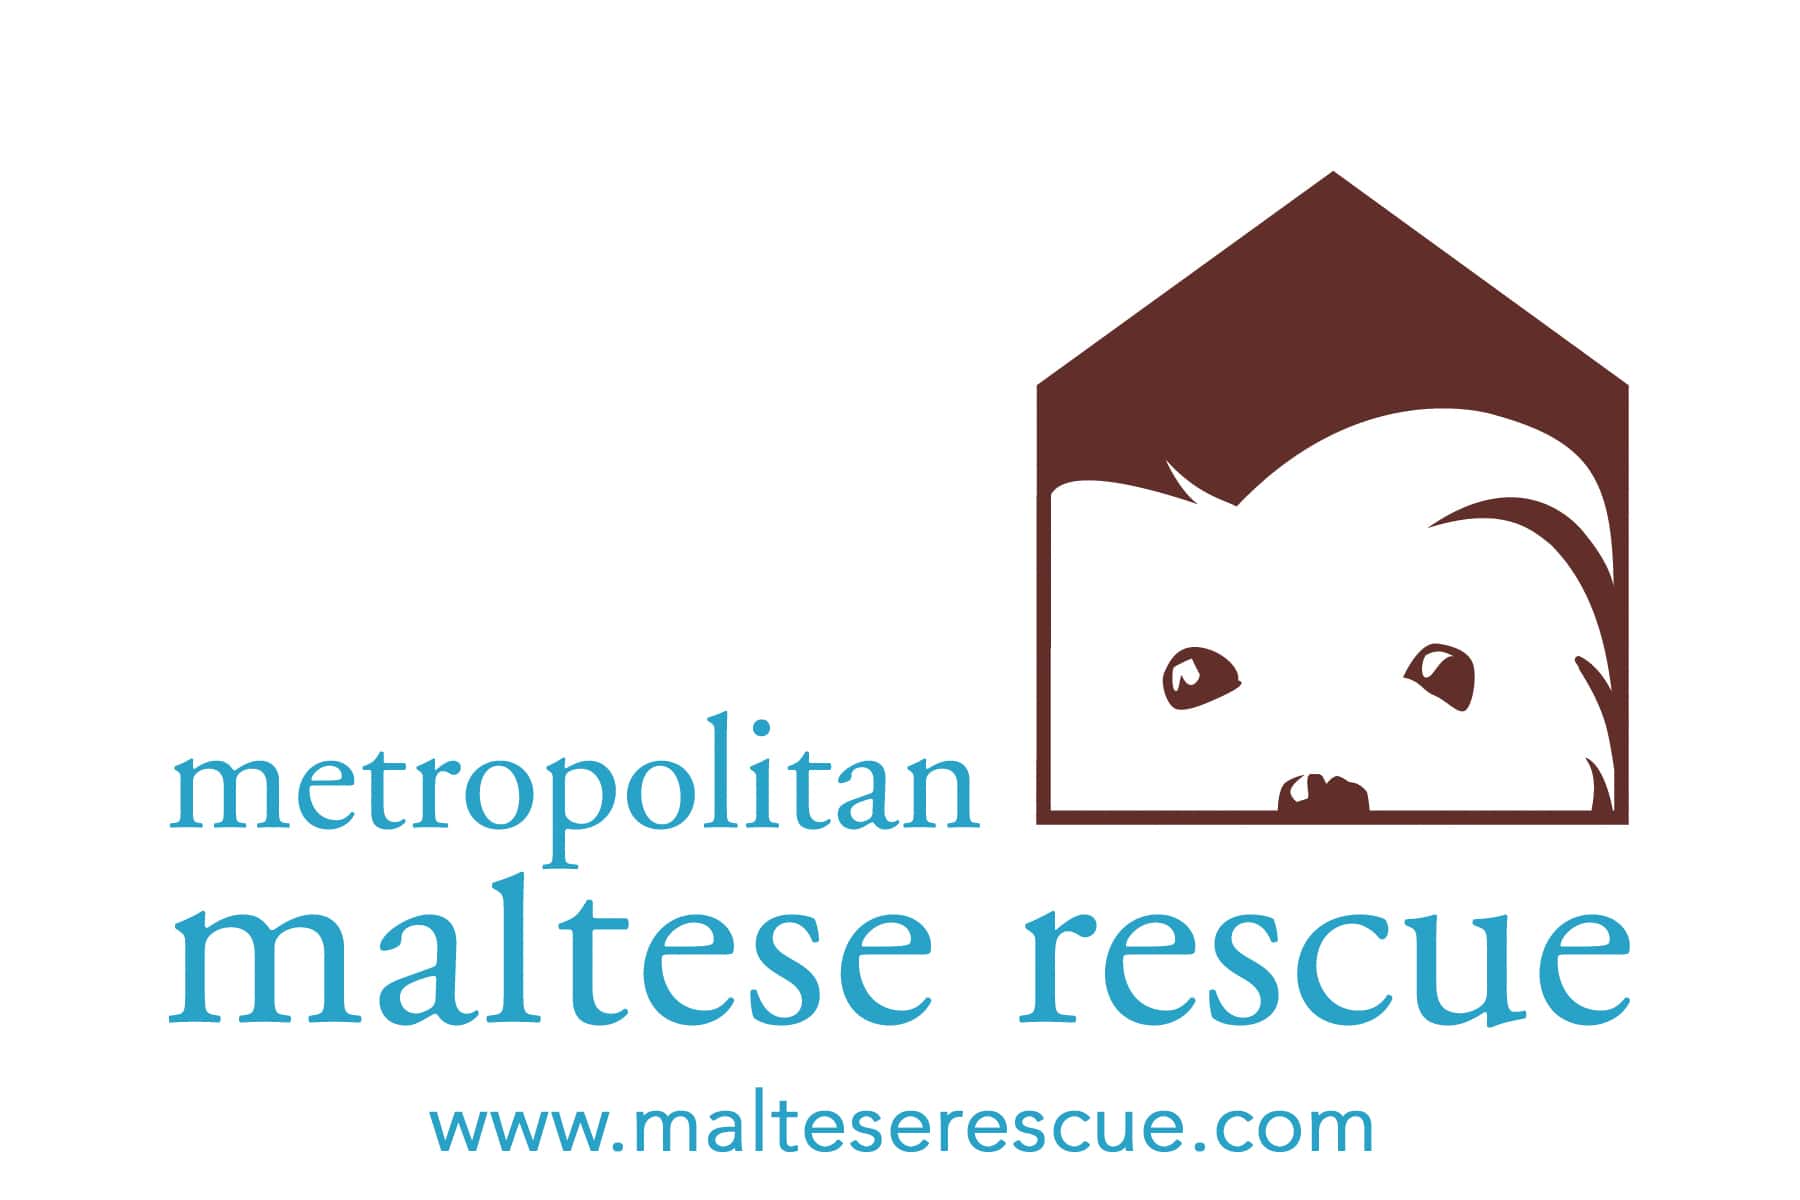 Metropolitan Maltese Rescue